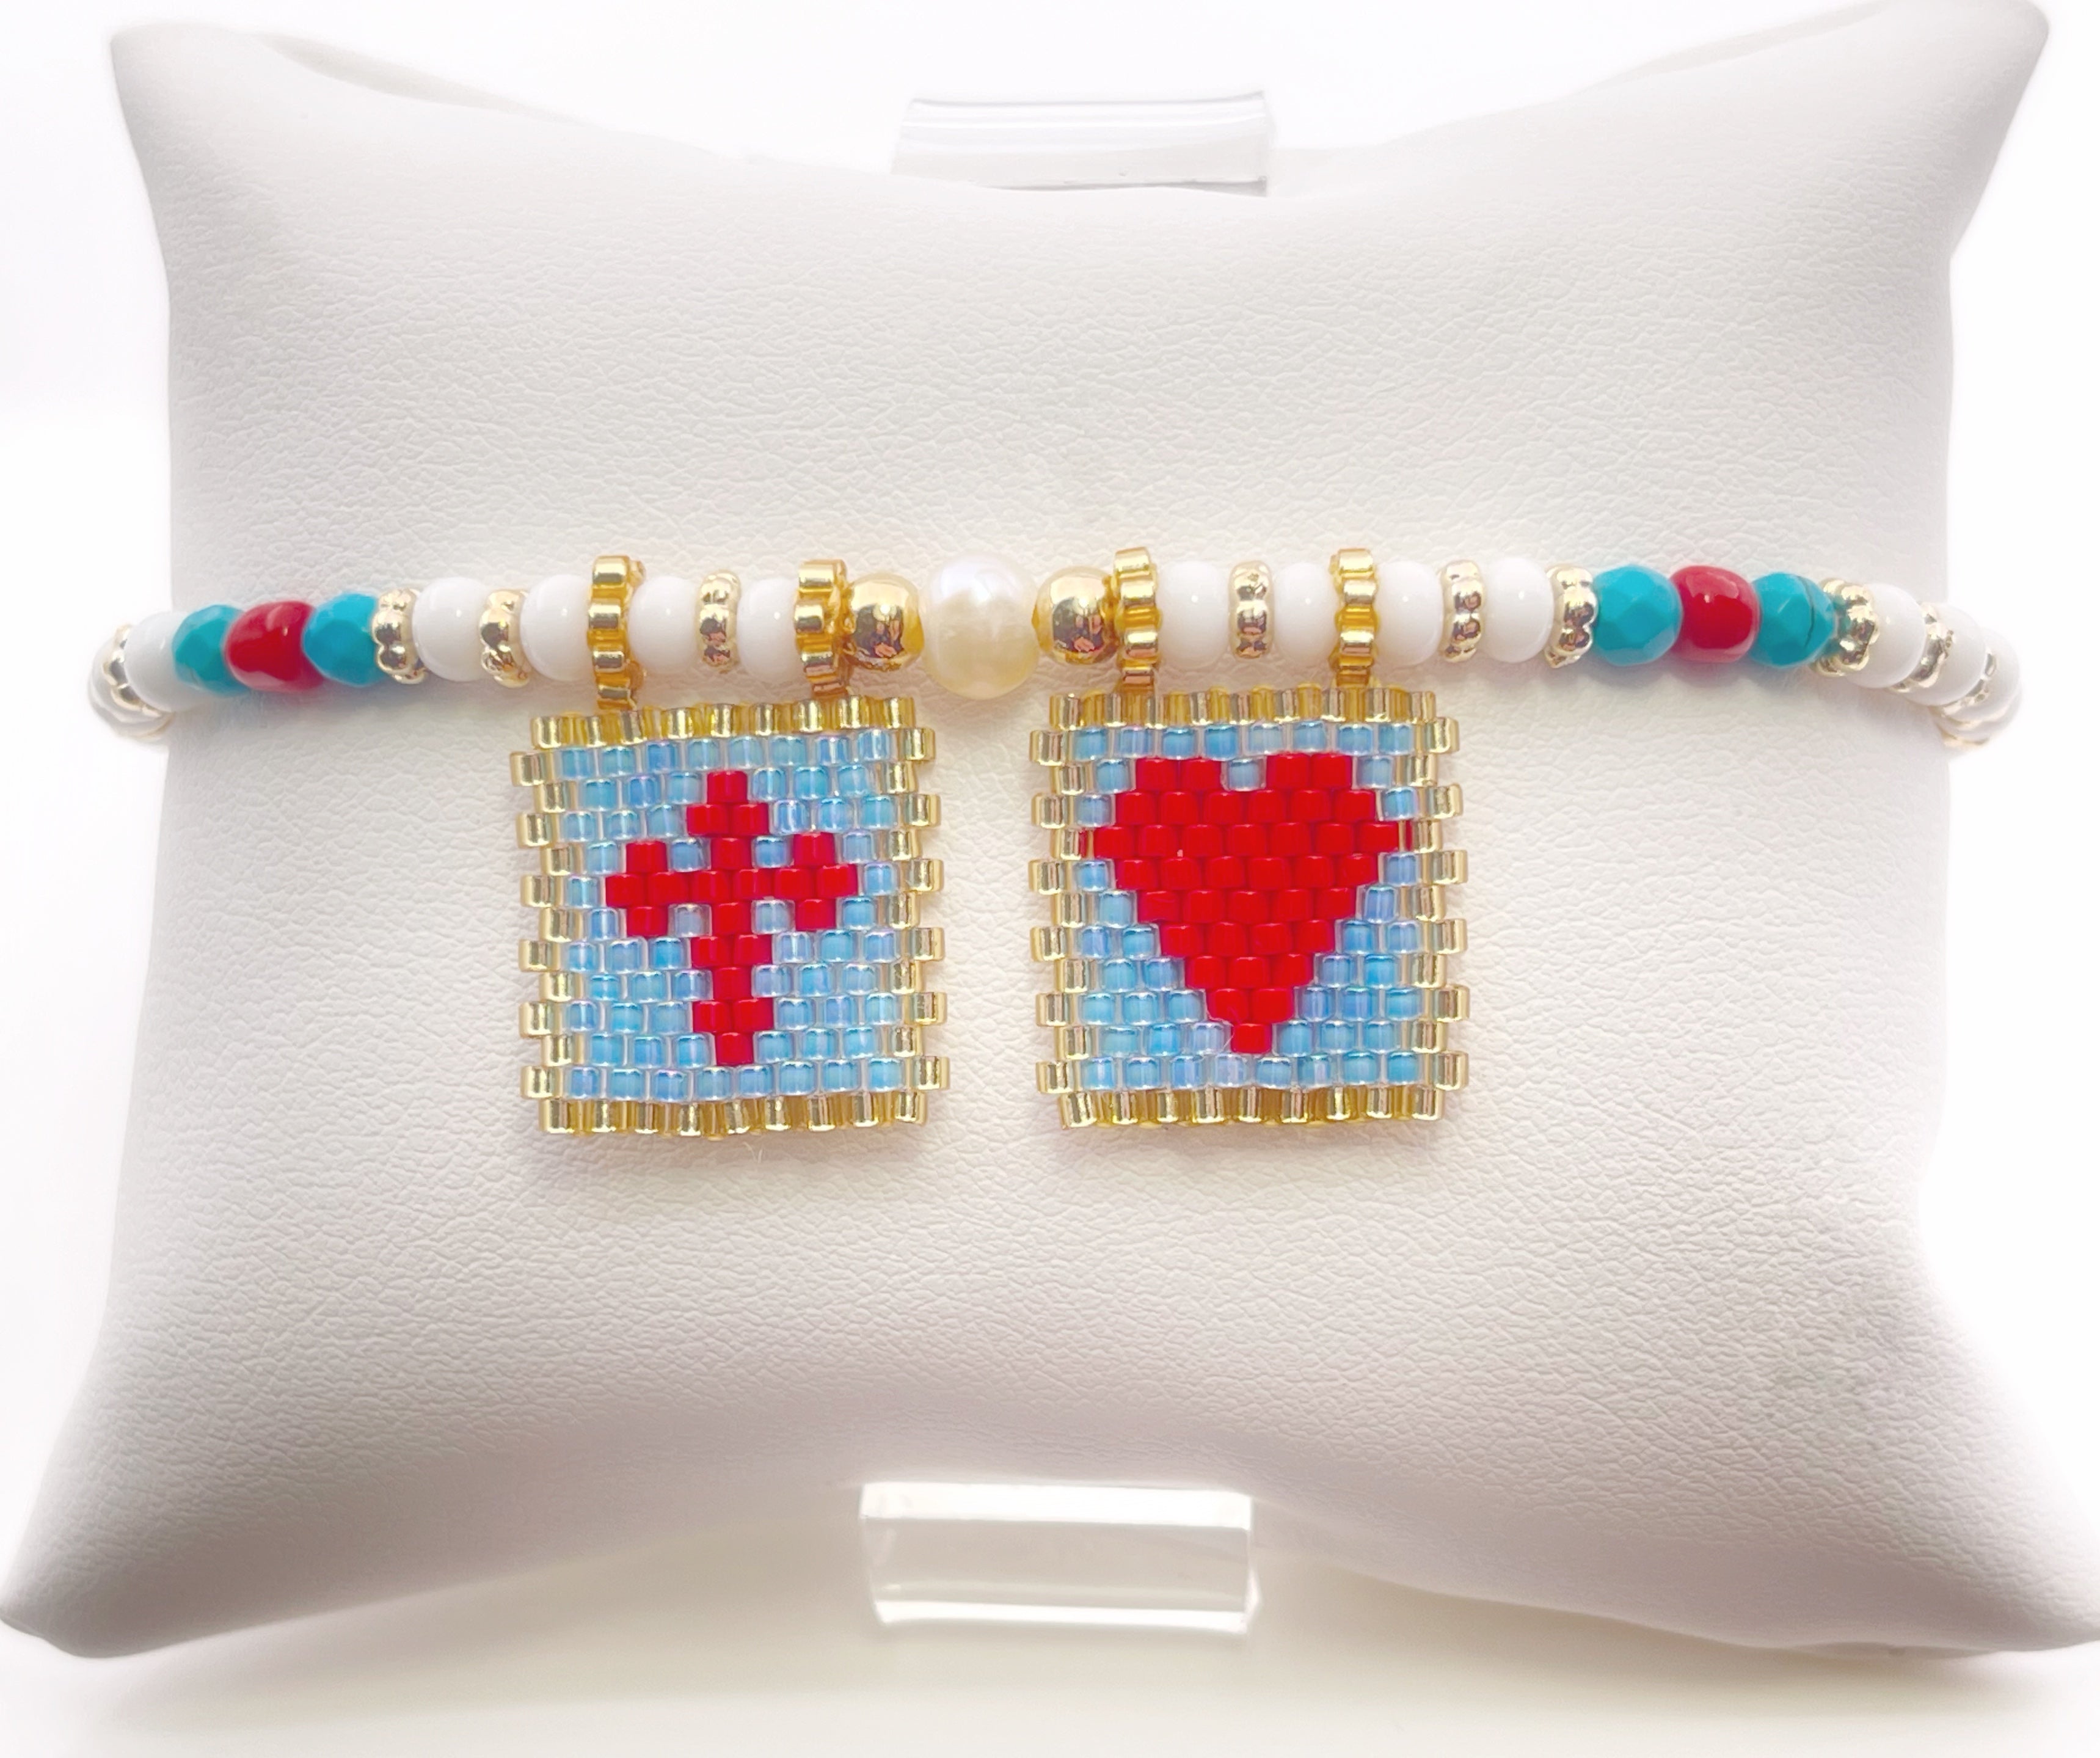 Colorful Scapular Medal Adjustable Beaded Summer Bracelet with Sacred Heart and Cross Symbols